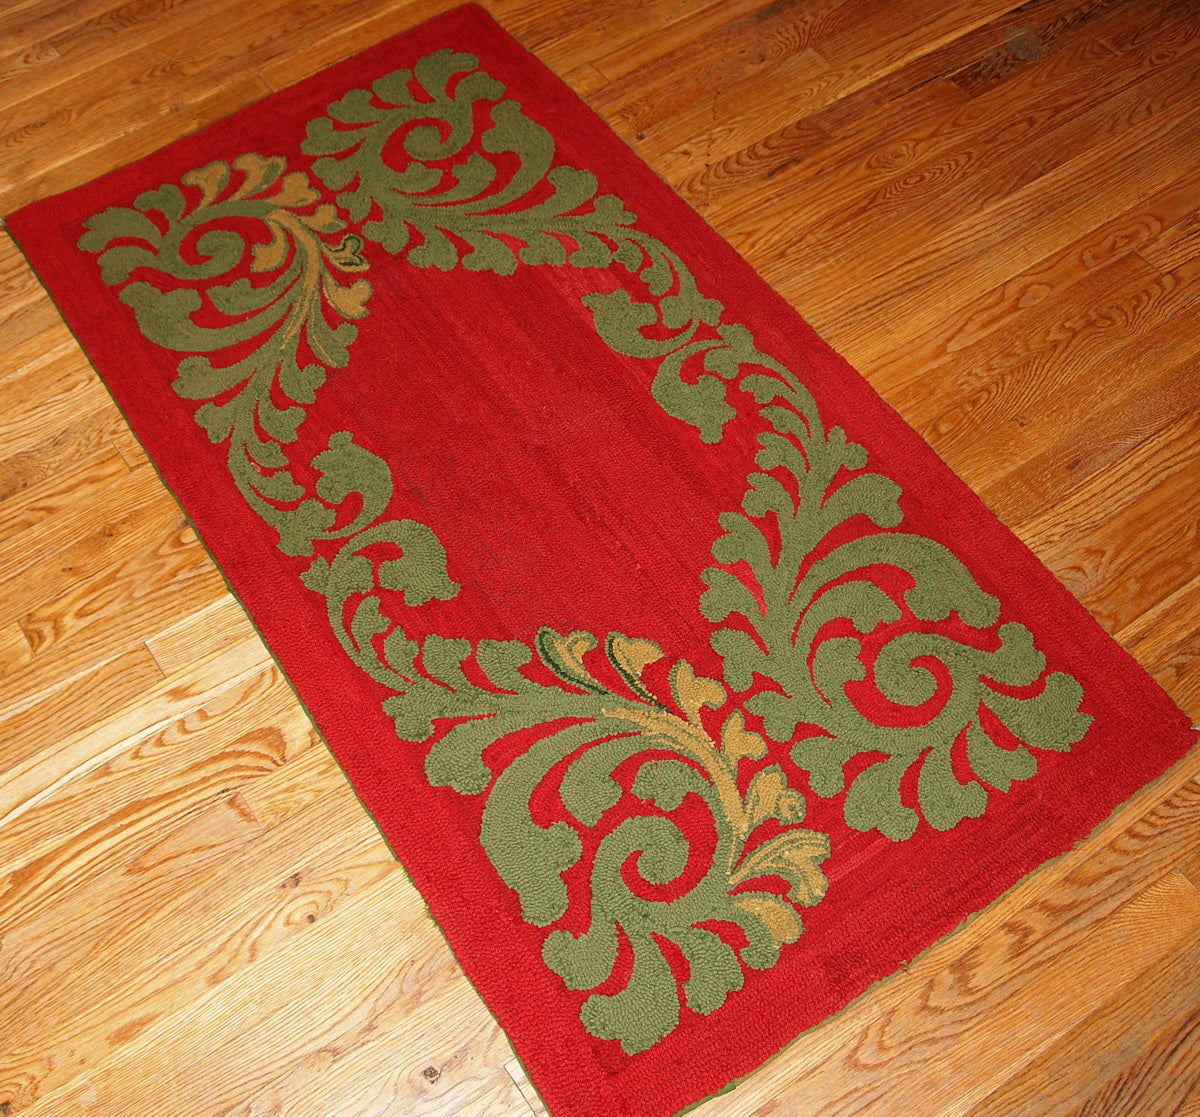 Handmade antique American Hooked rug 2.9' x 5' (88cm x 152cm) 1920s - 1B182